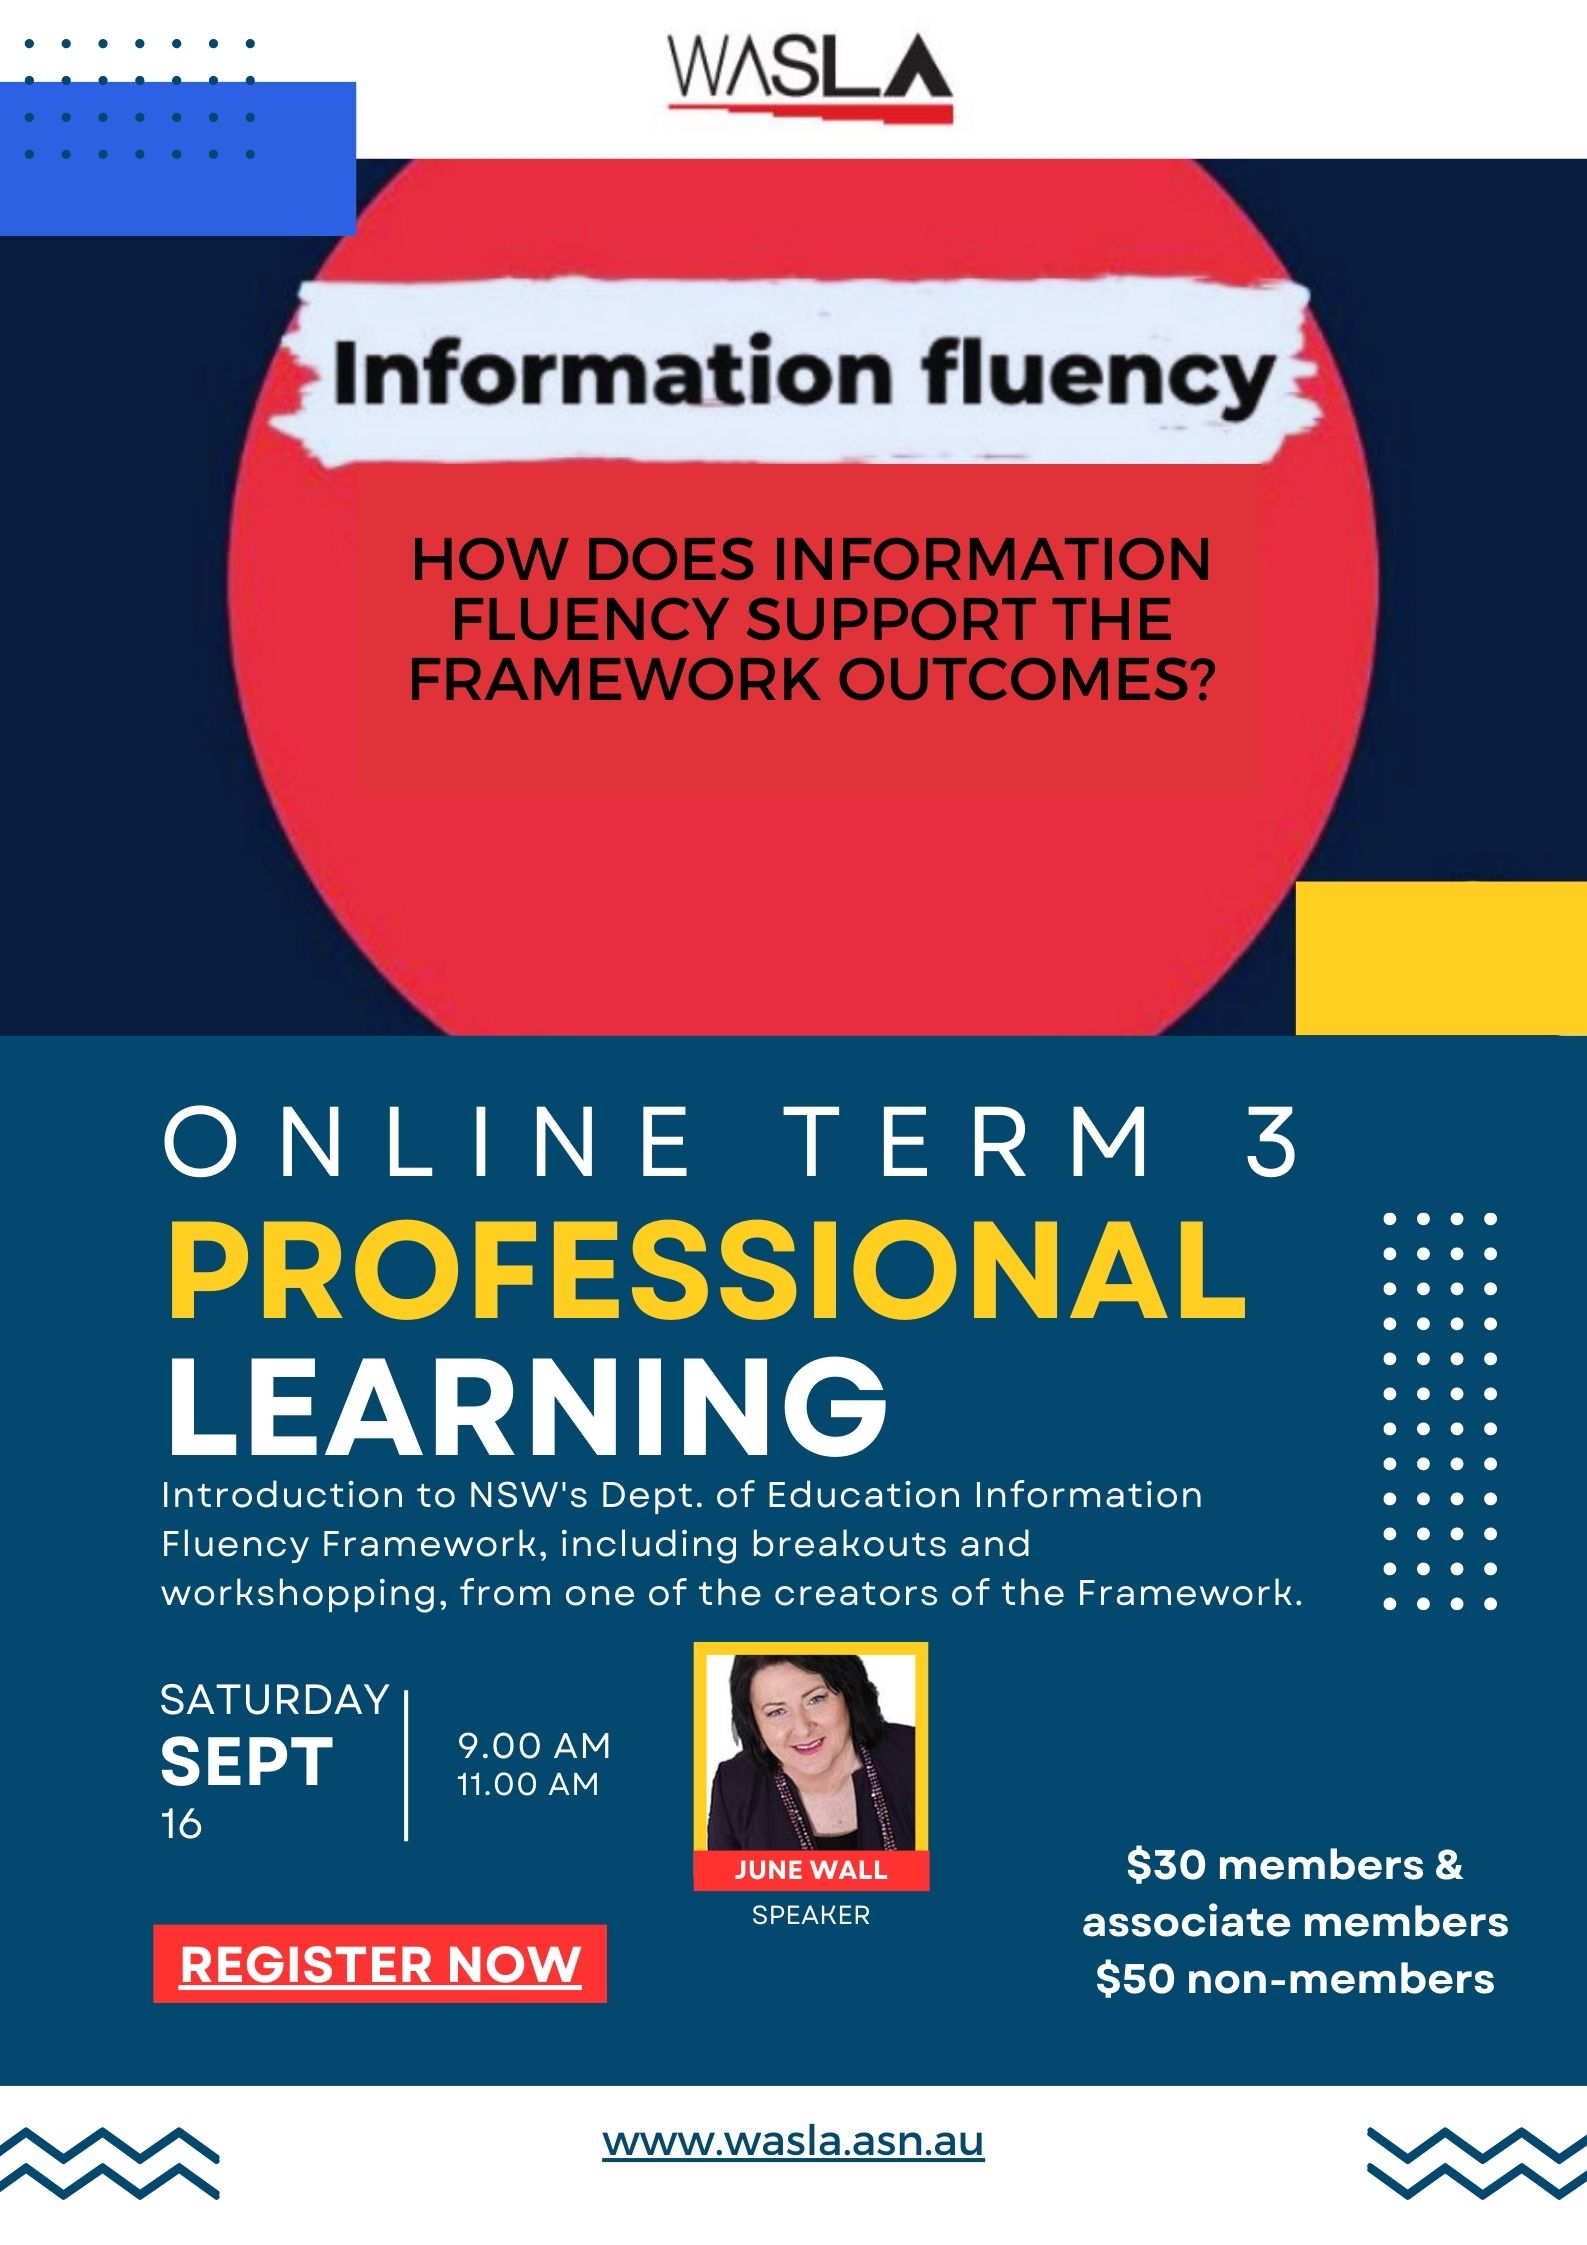 IFF - Information Fluency Framework - WASLA